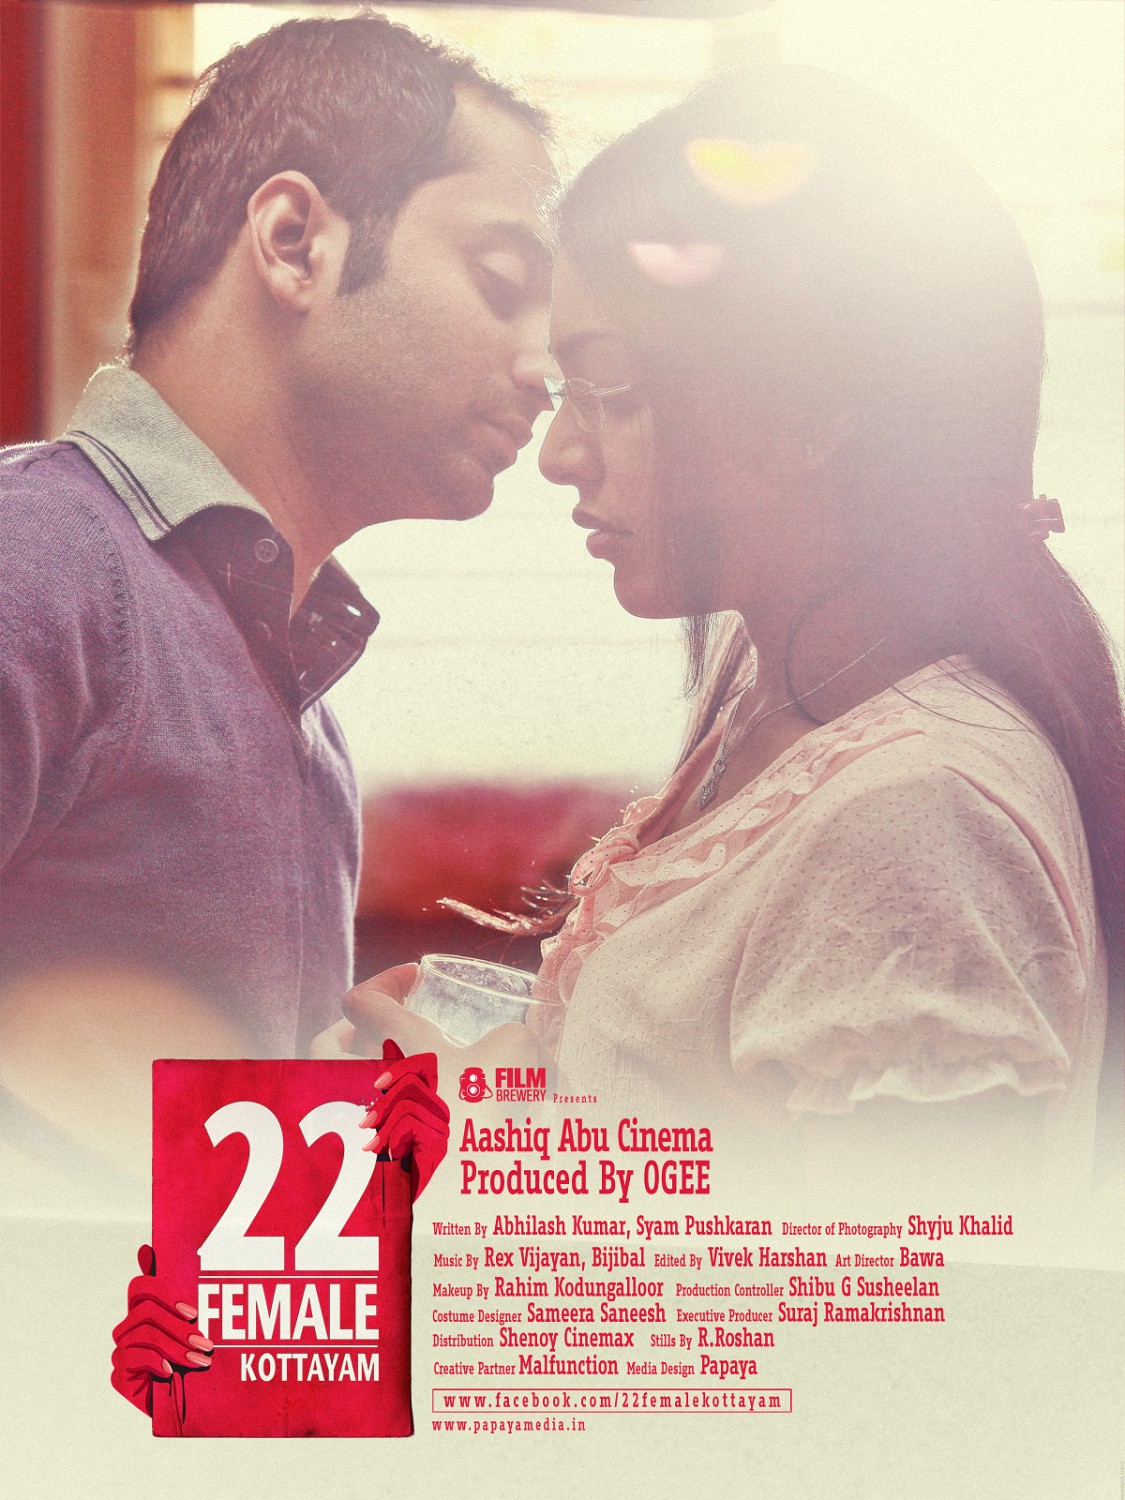 Extra Large Movie Poster Image for 22 Female Kottayam (#7 of 28)